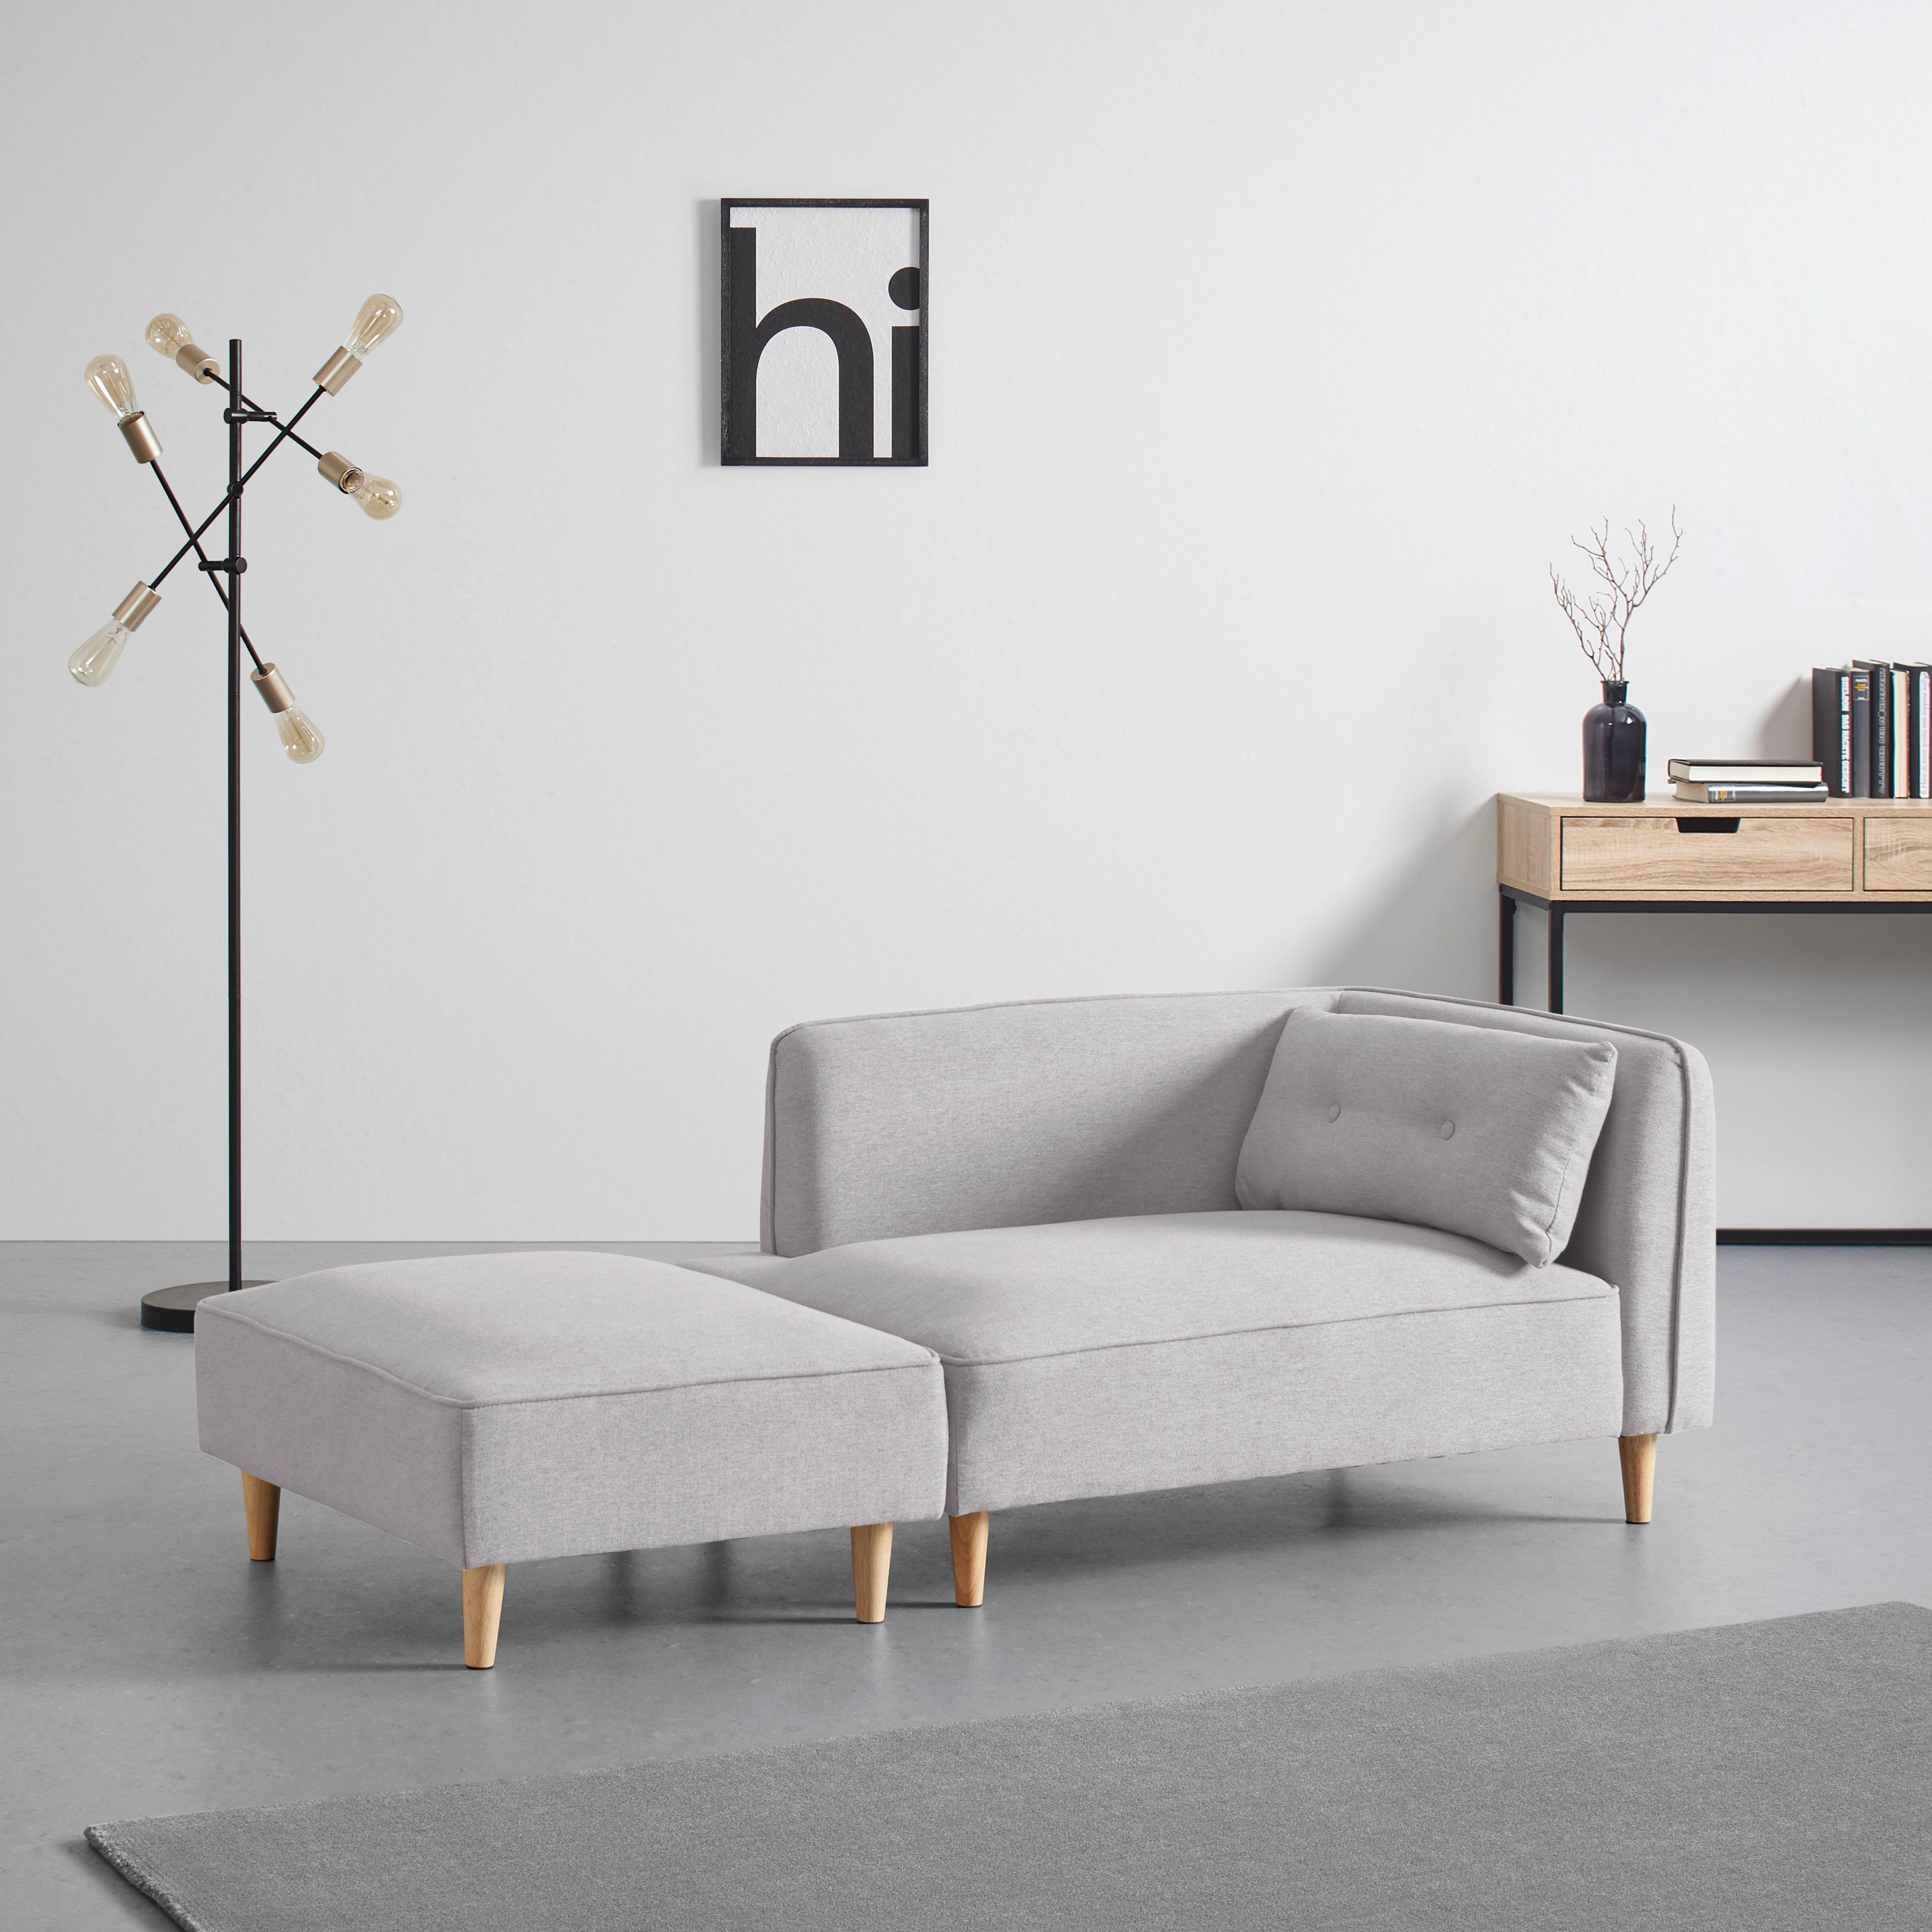 Modulares Sofa "Fanny" mit Hocker, hellgrau - Hellgrau/Naturfarben, MODERN, Holz/Textil (154/55/73cm) - Bessagi Home